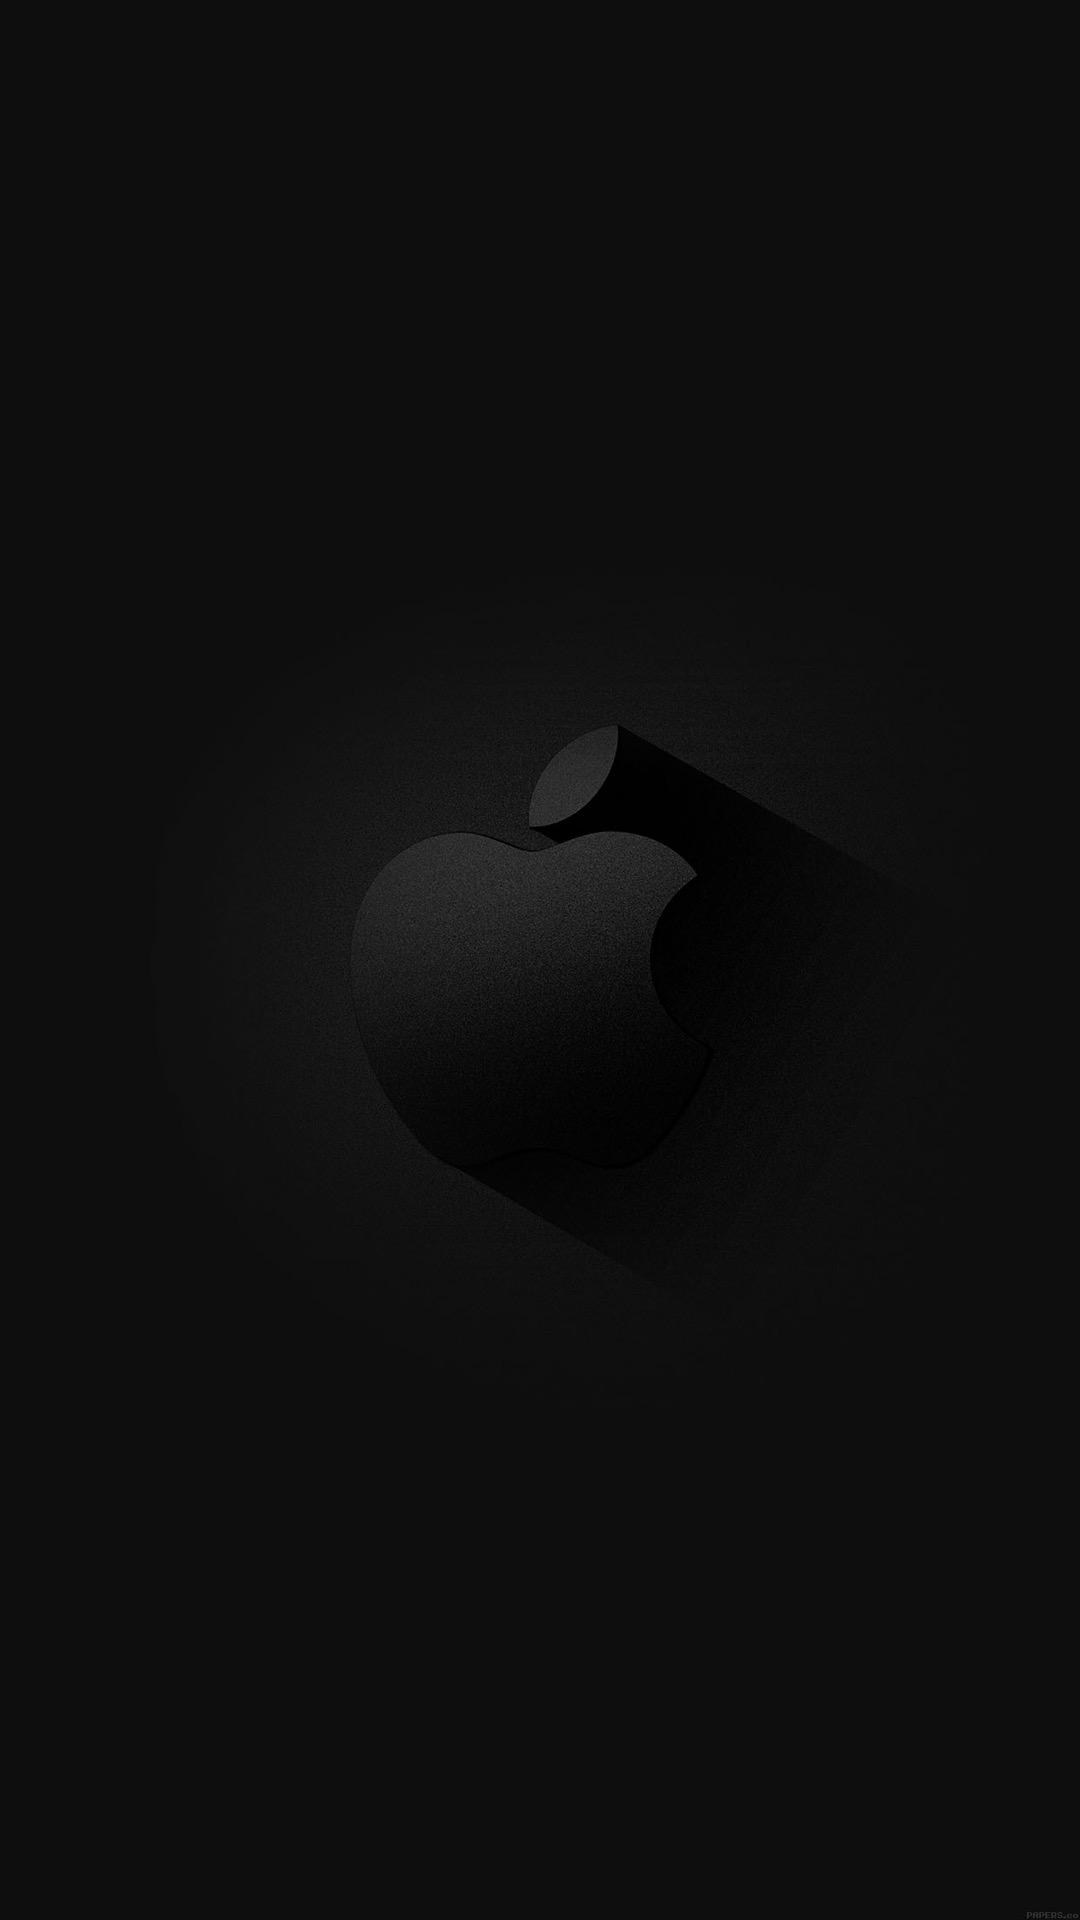 Black Apple iPhone wallpaper